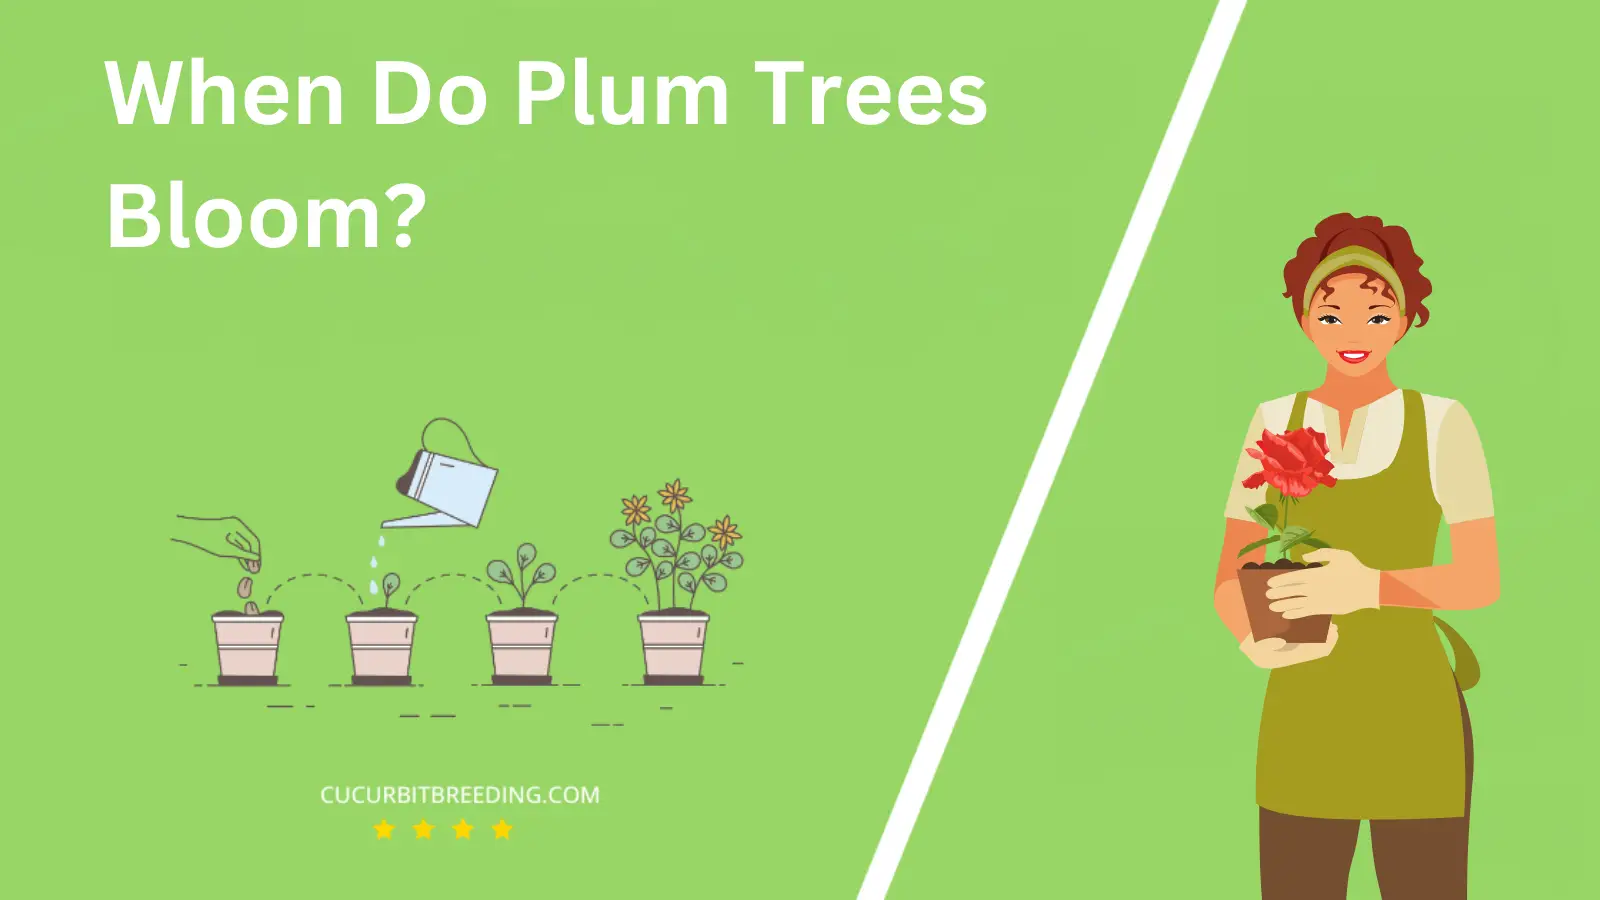 When Do Plum Trees Bloom?